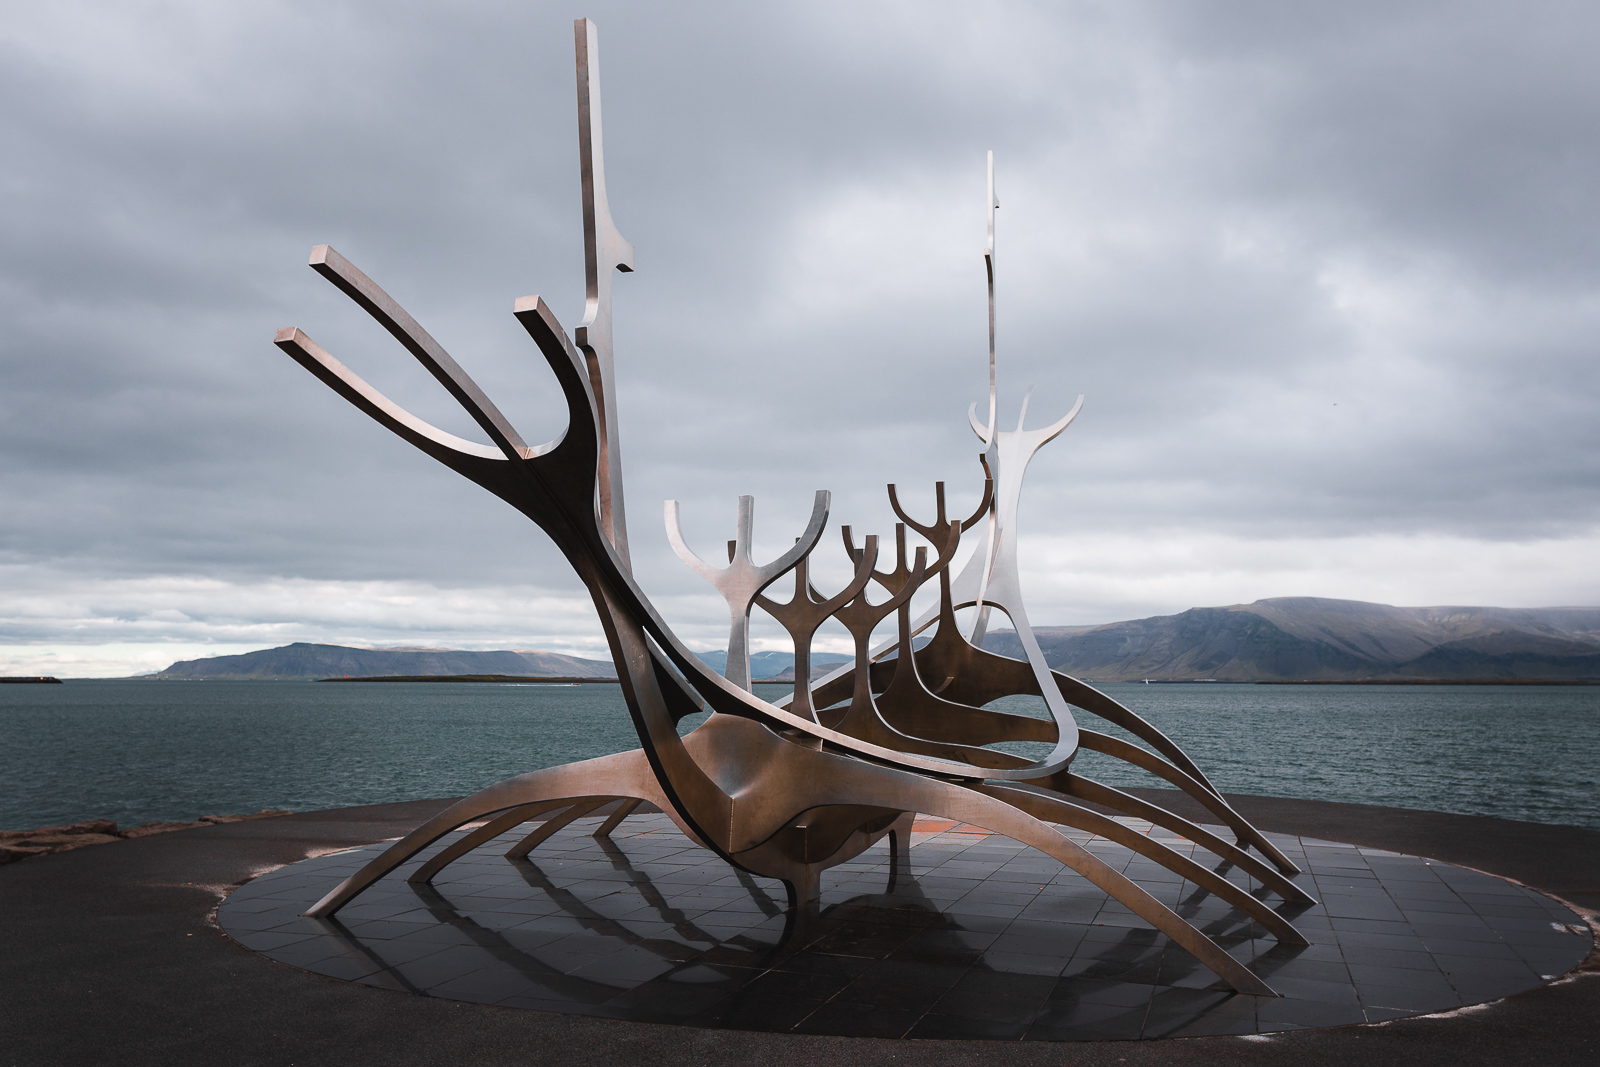 The Sun Voyager sculpture, Reykjavík